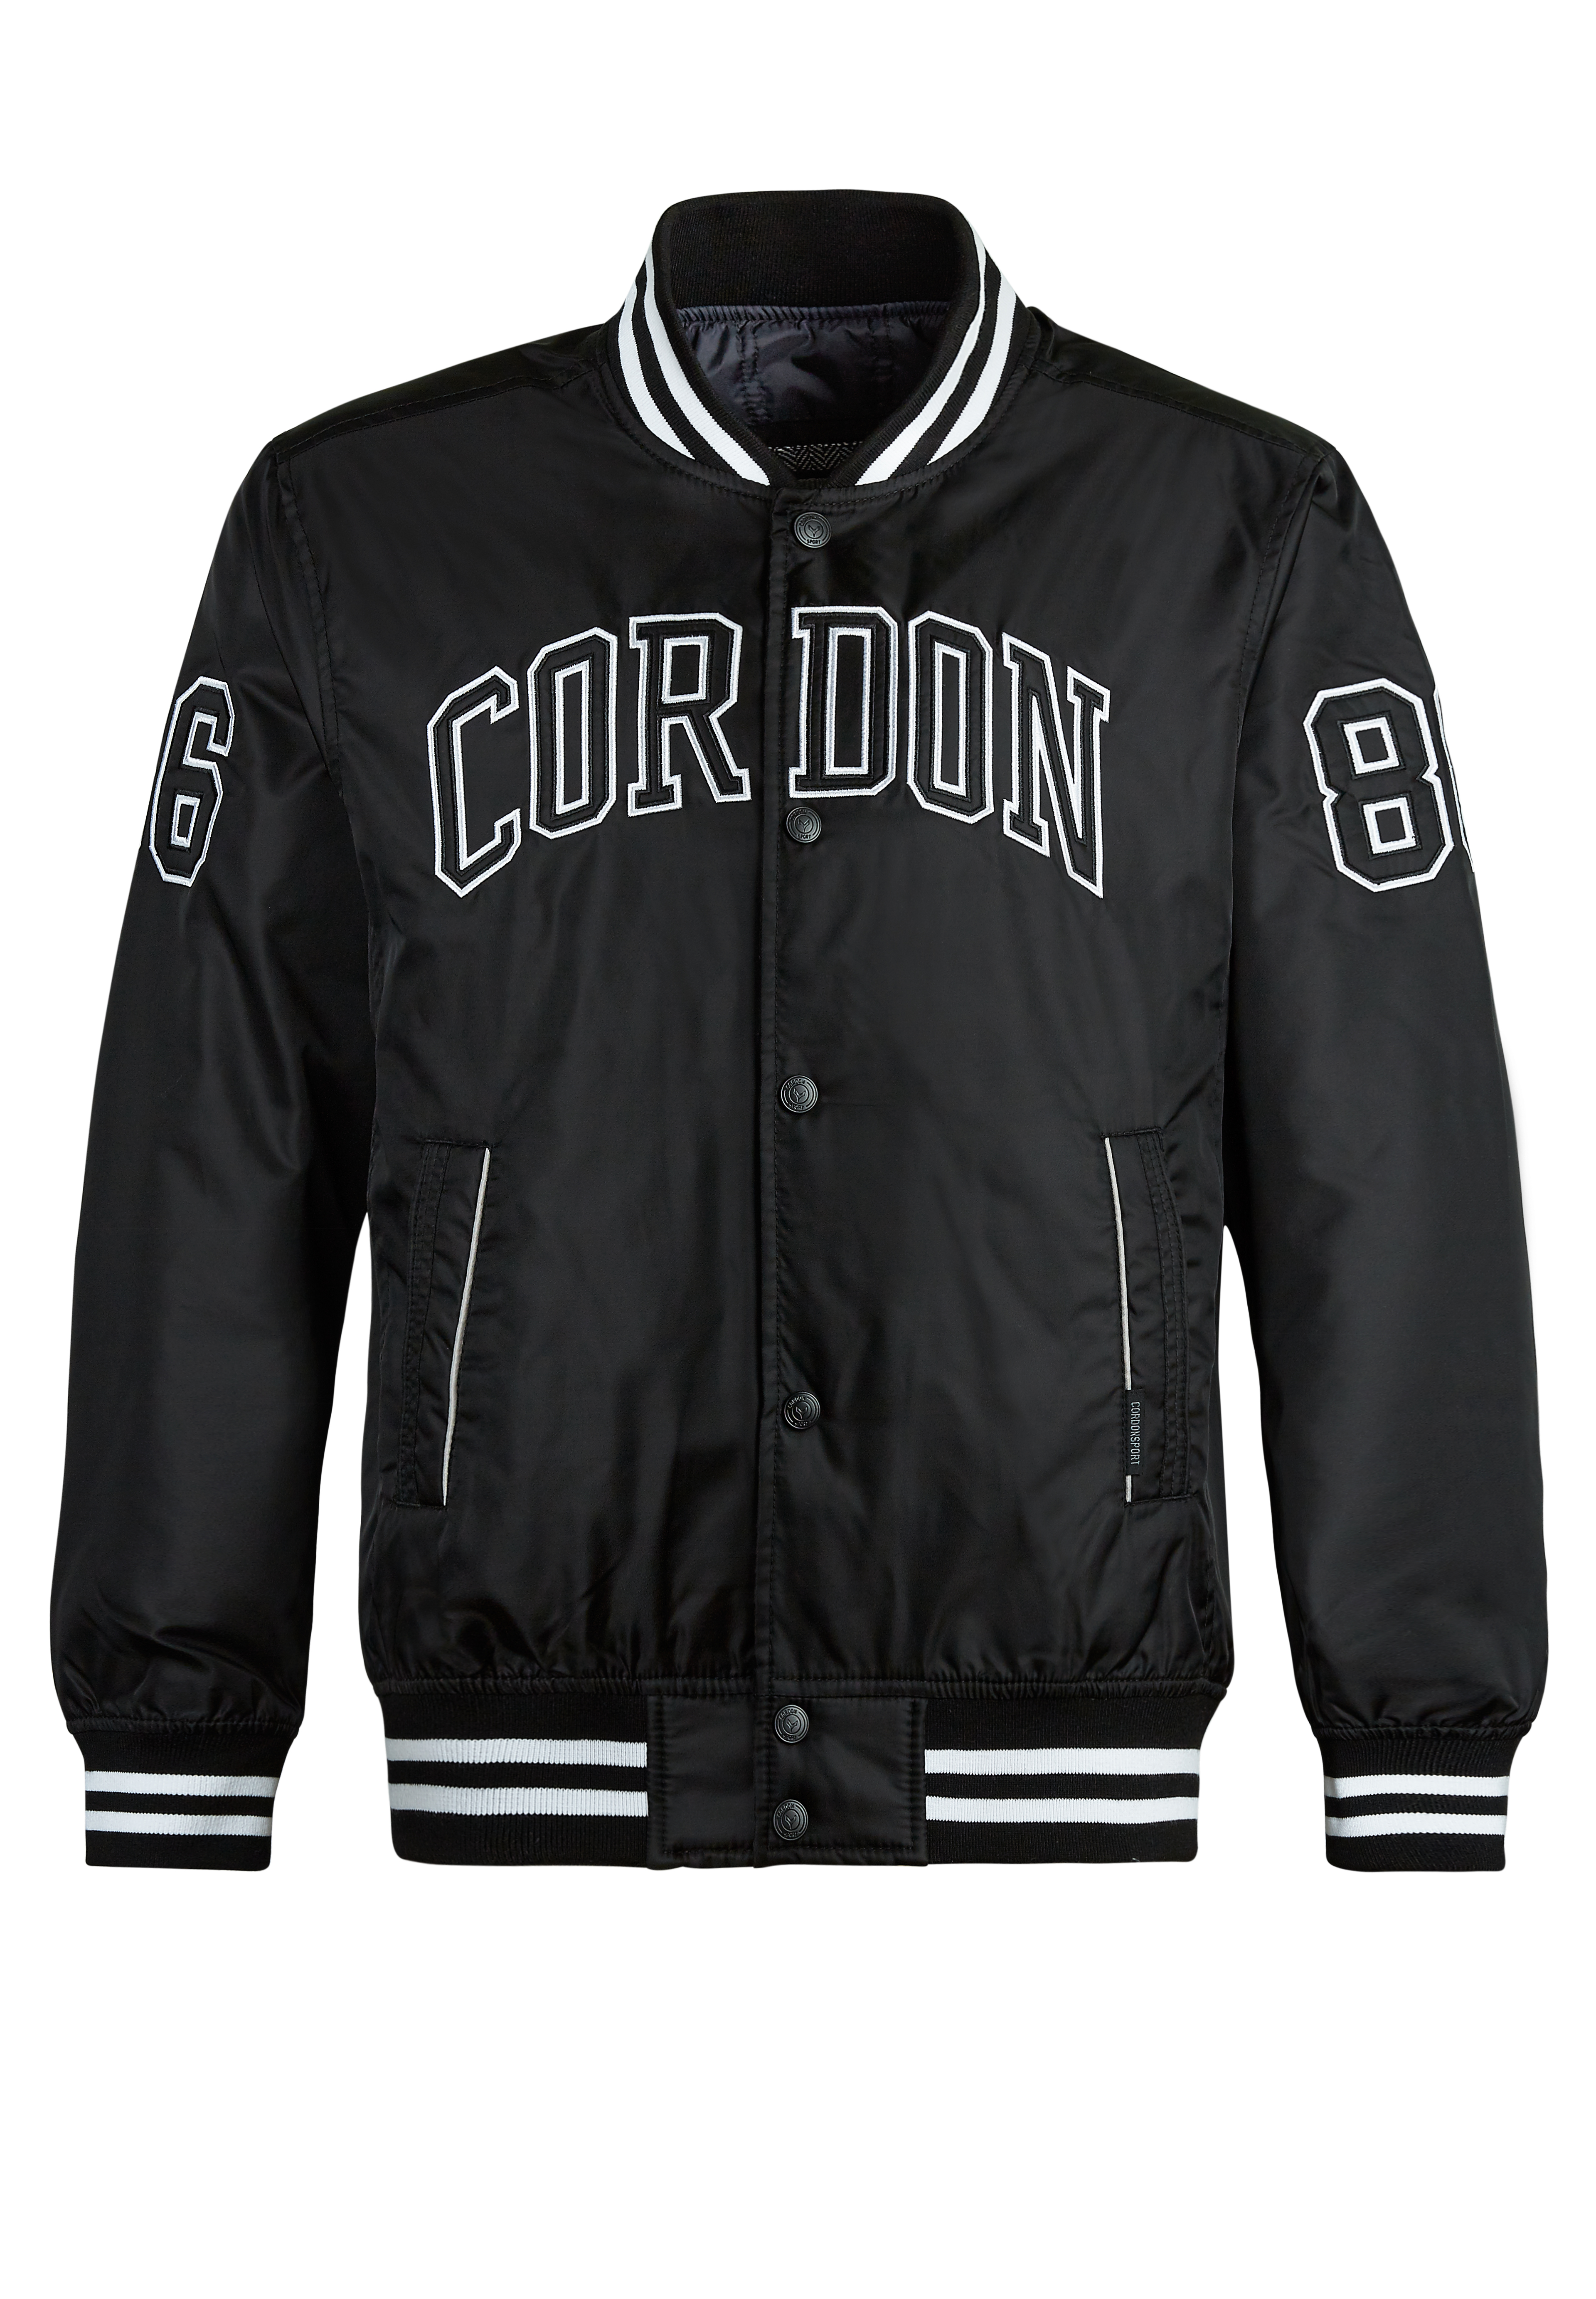 Cordon Sport King Jacket